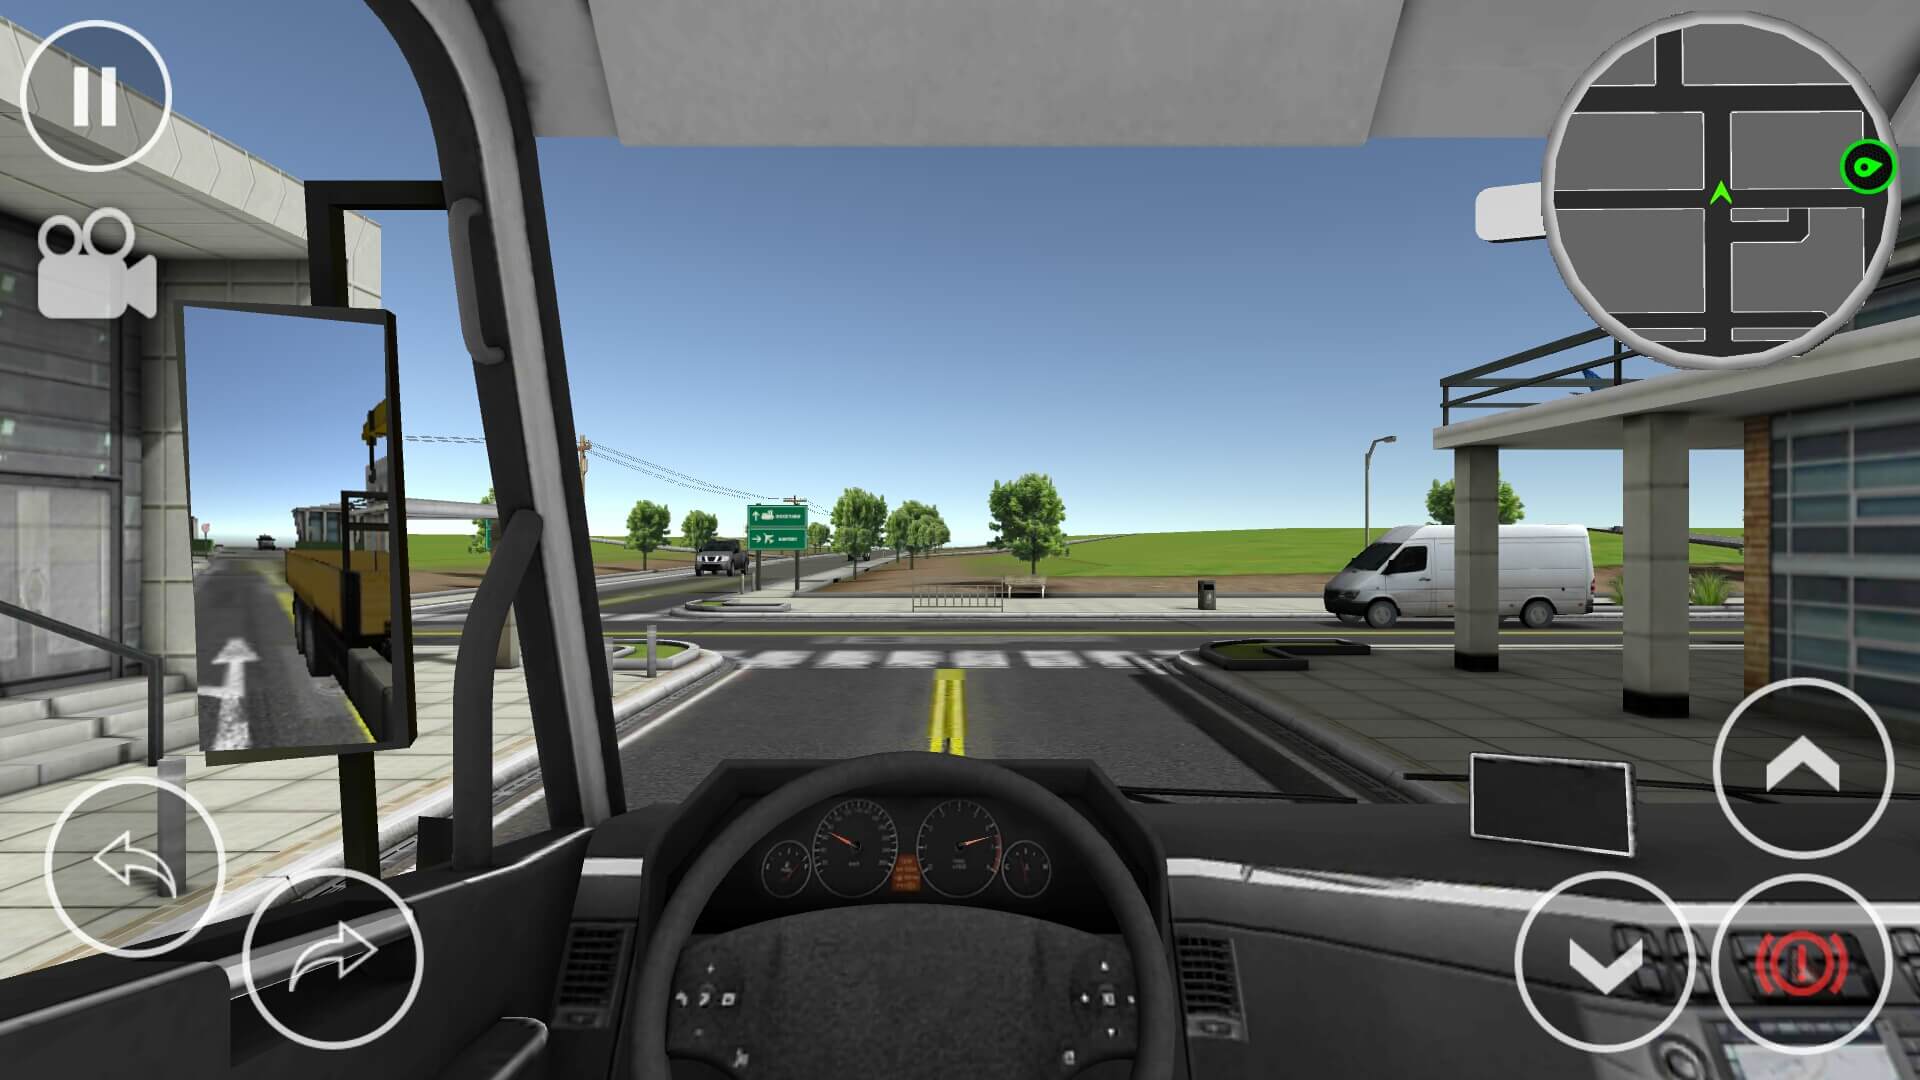 pc driving simulator games